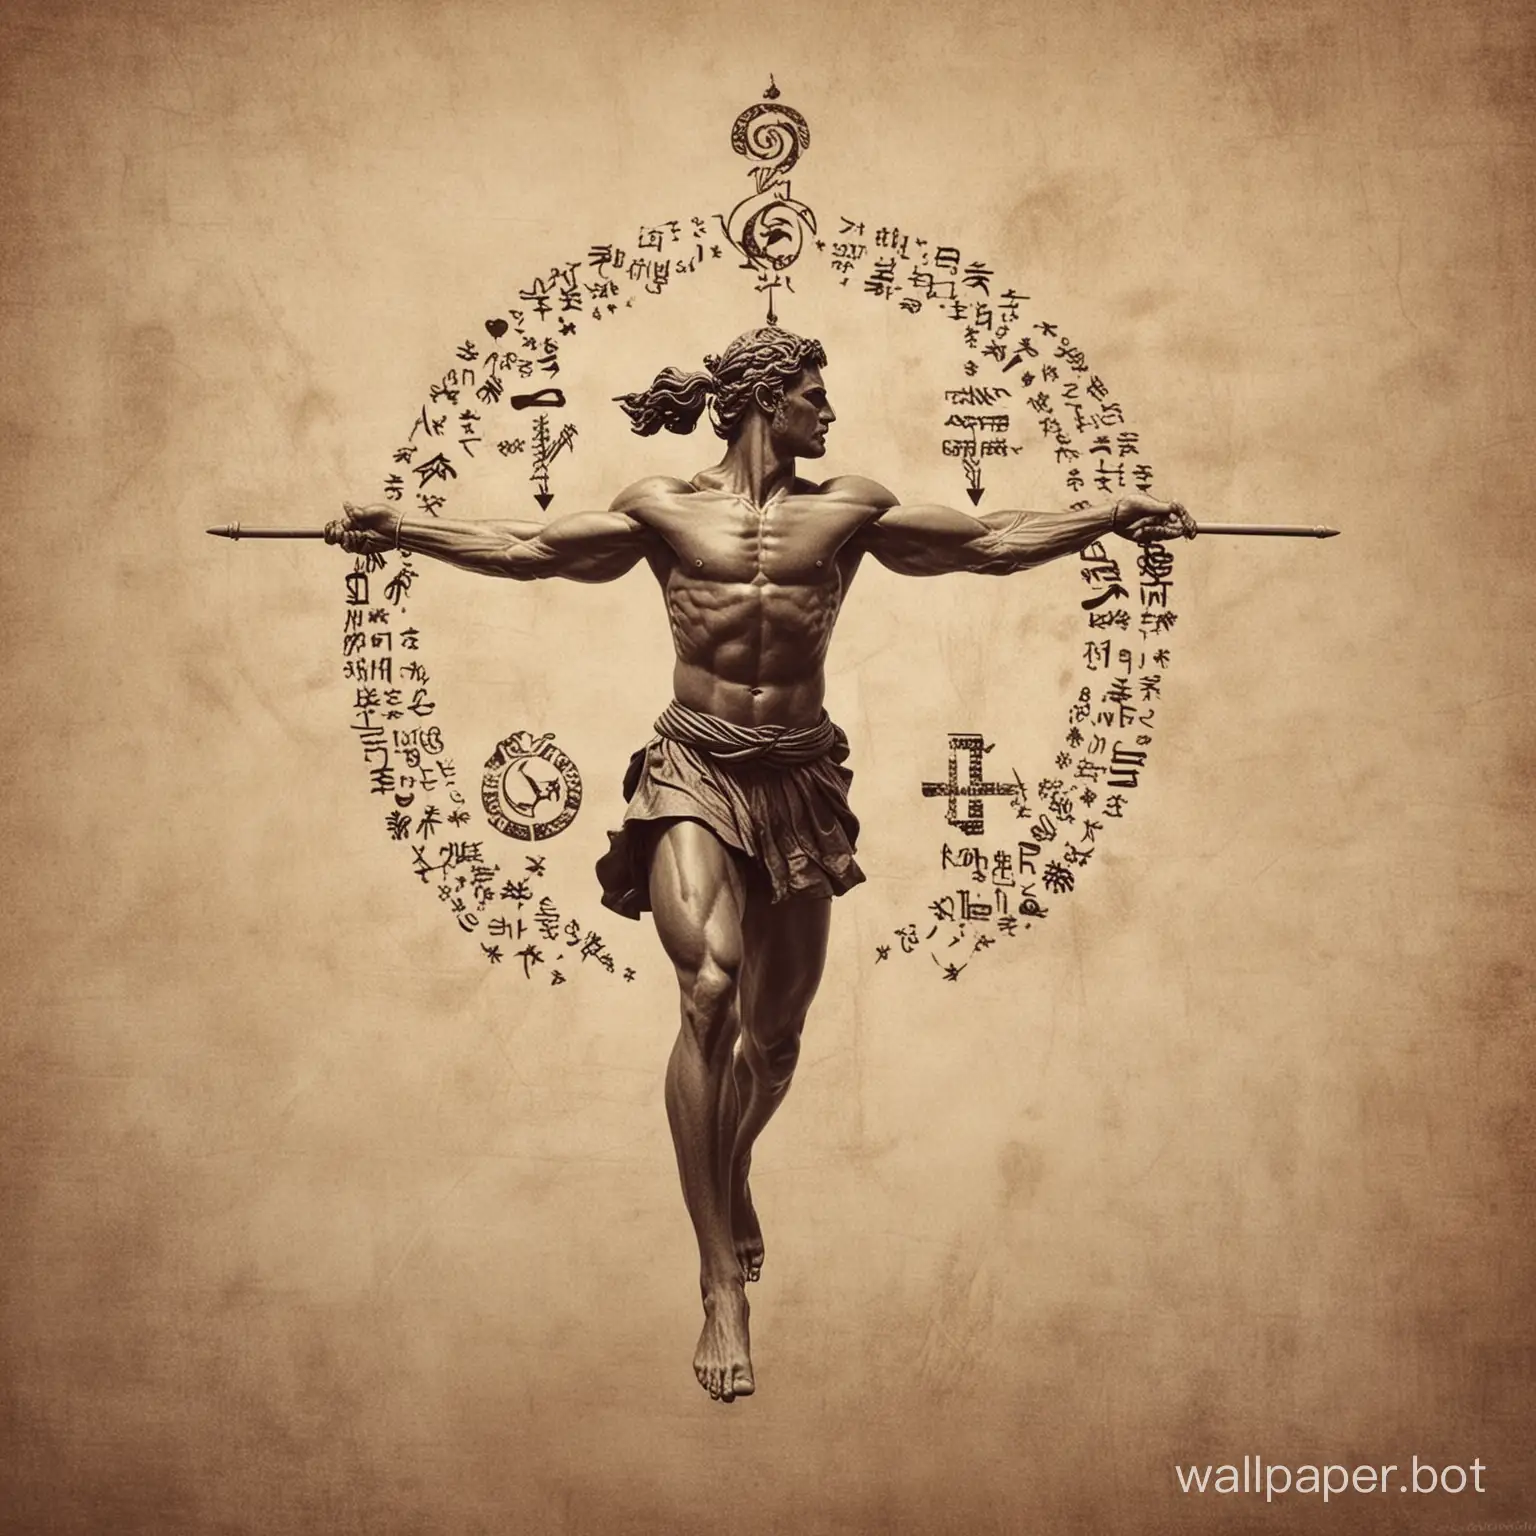 Symbolic-Wallpaper-Athletes-Body-Stoic-Mind-Warrior-Spirit-Poets-Heart